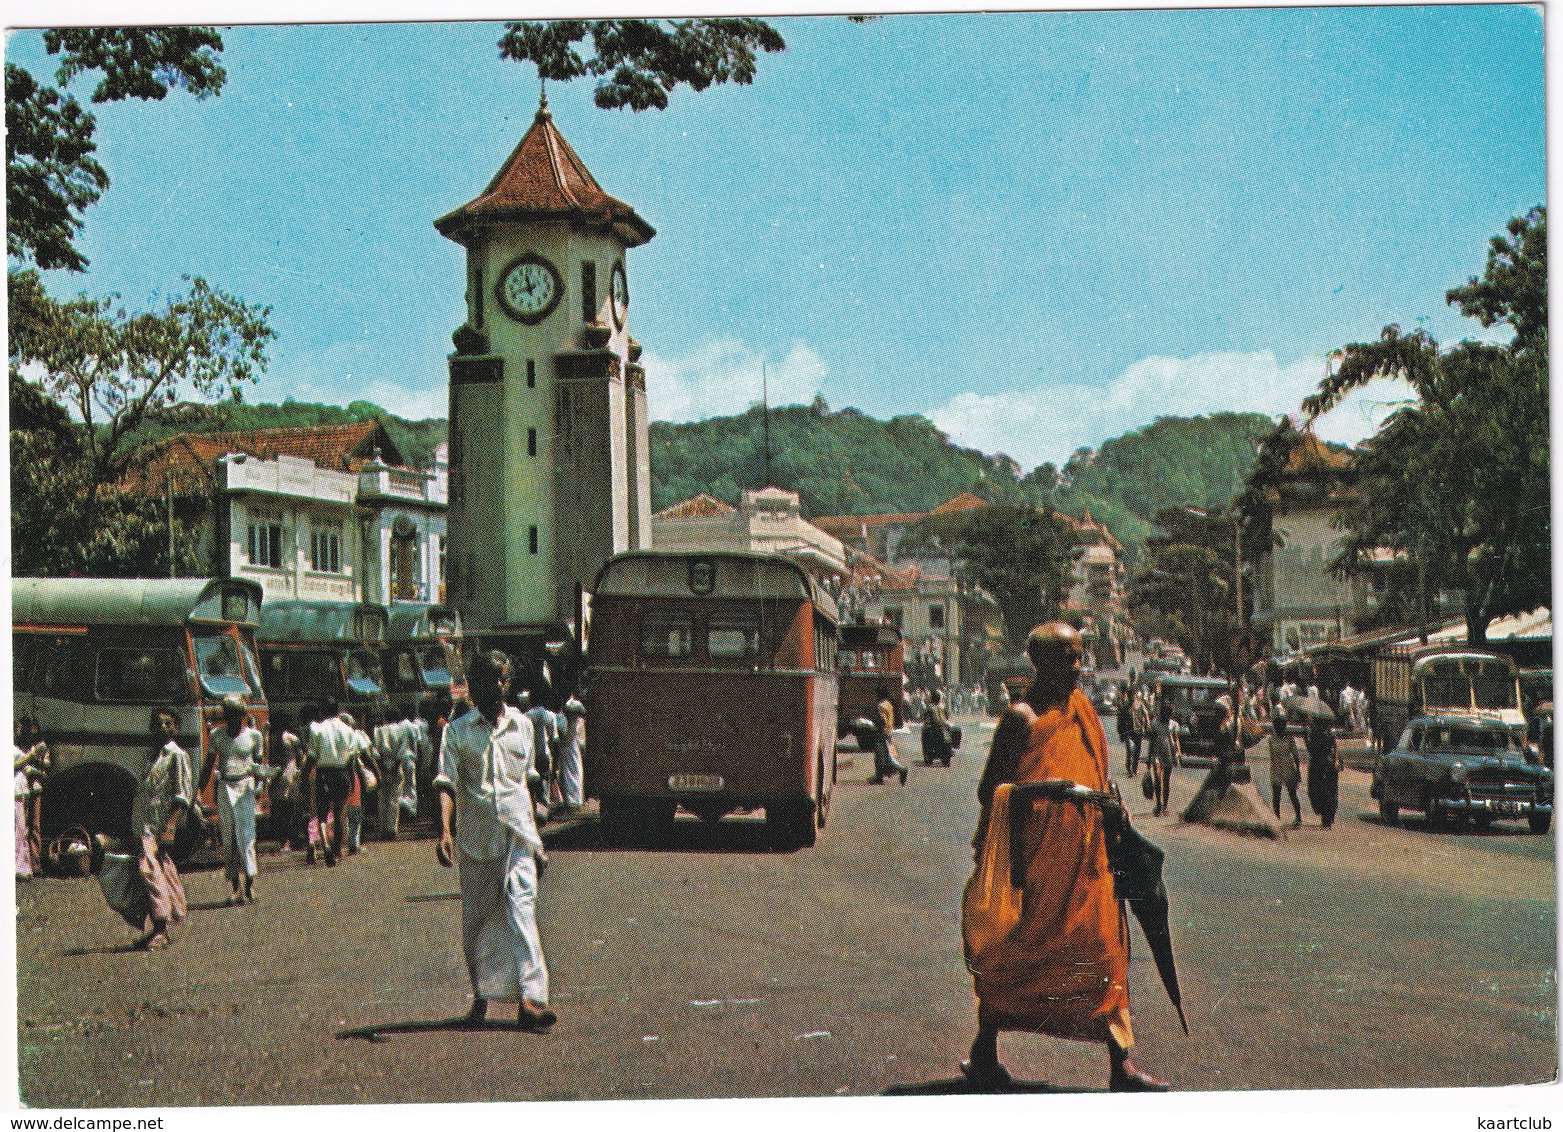 Kandy: 5x AUTOBUS/COACH, PEUGEOT 403, JEEP - Street Scene - (Sri Lanka) - Toerisme